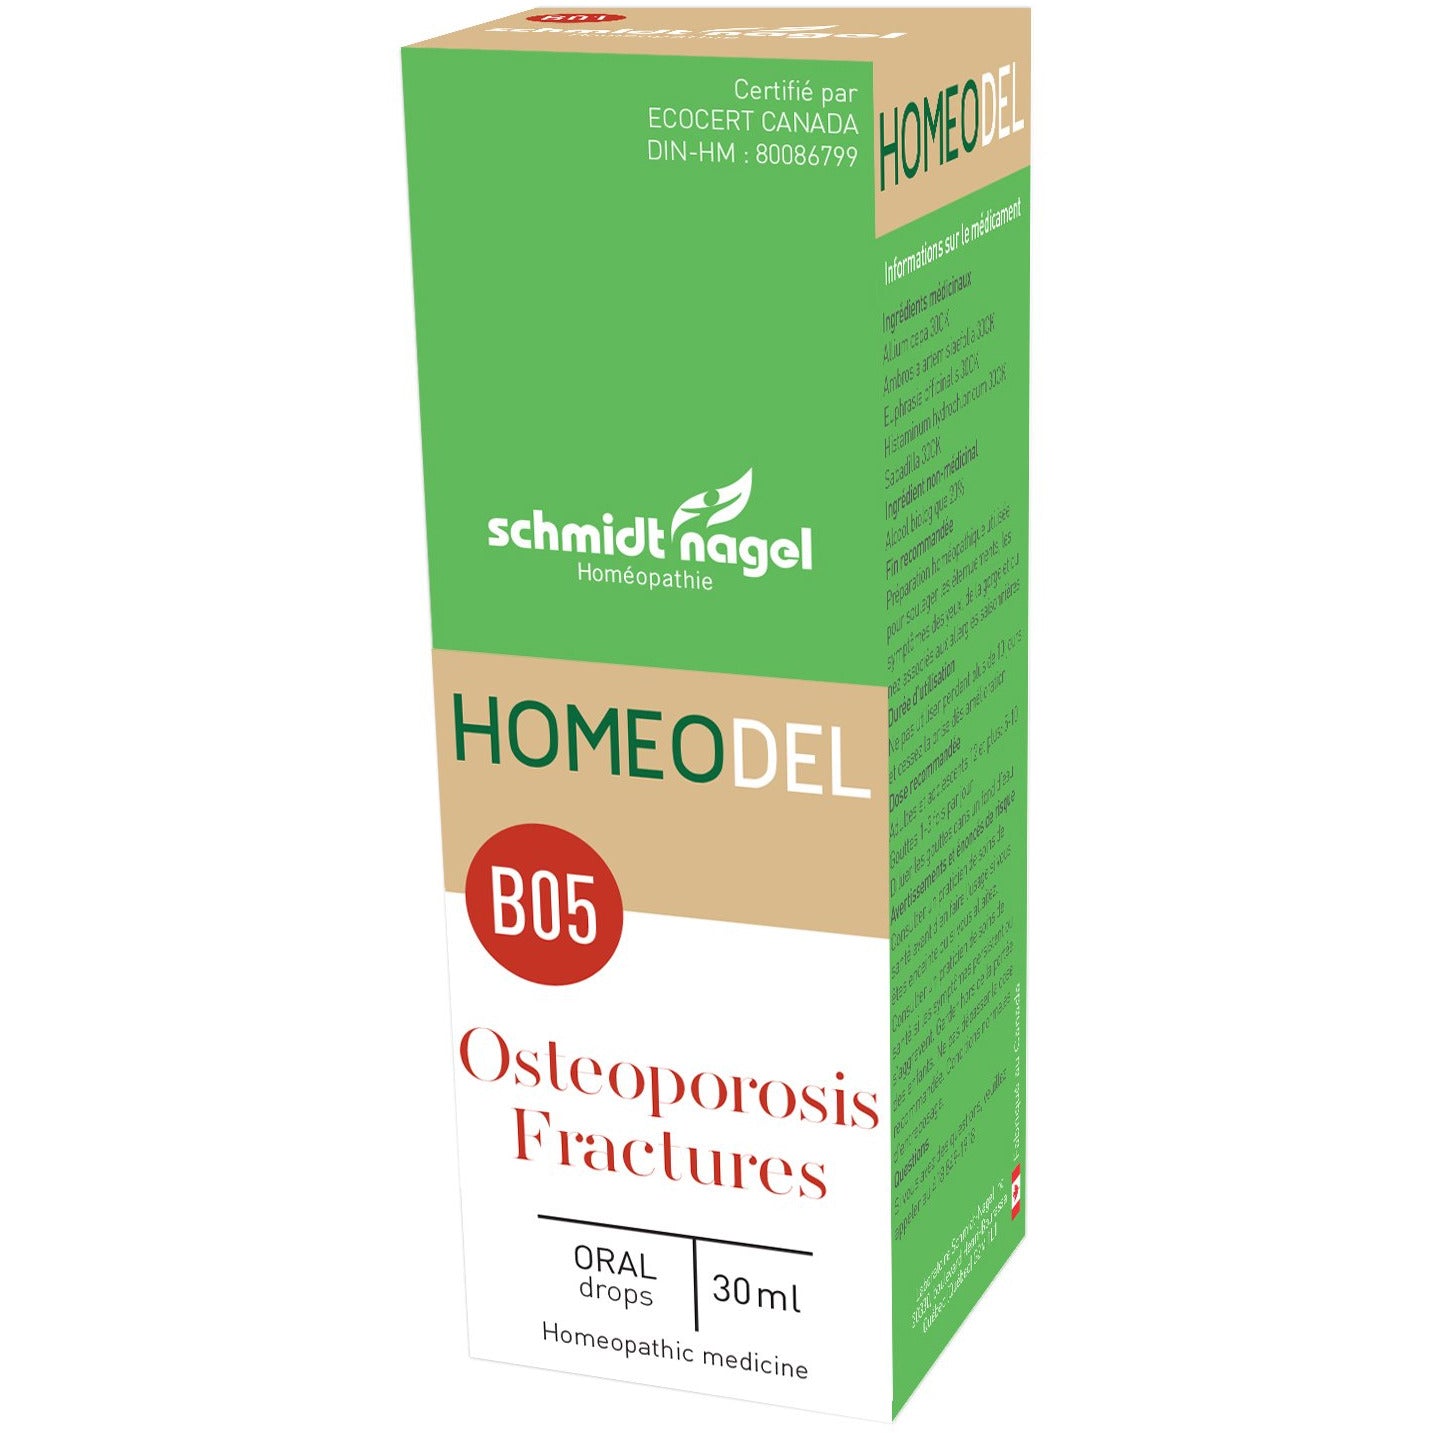 HOMEODEL B05 – Osteoporosis, Fractures 30 ml